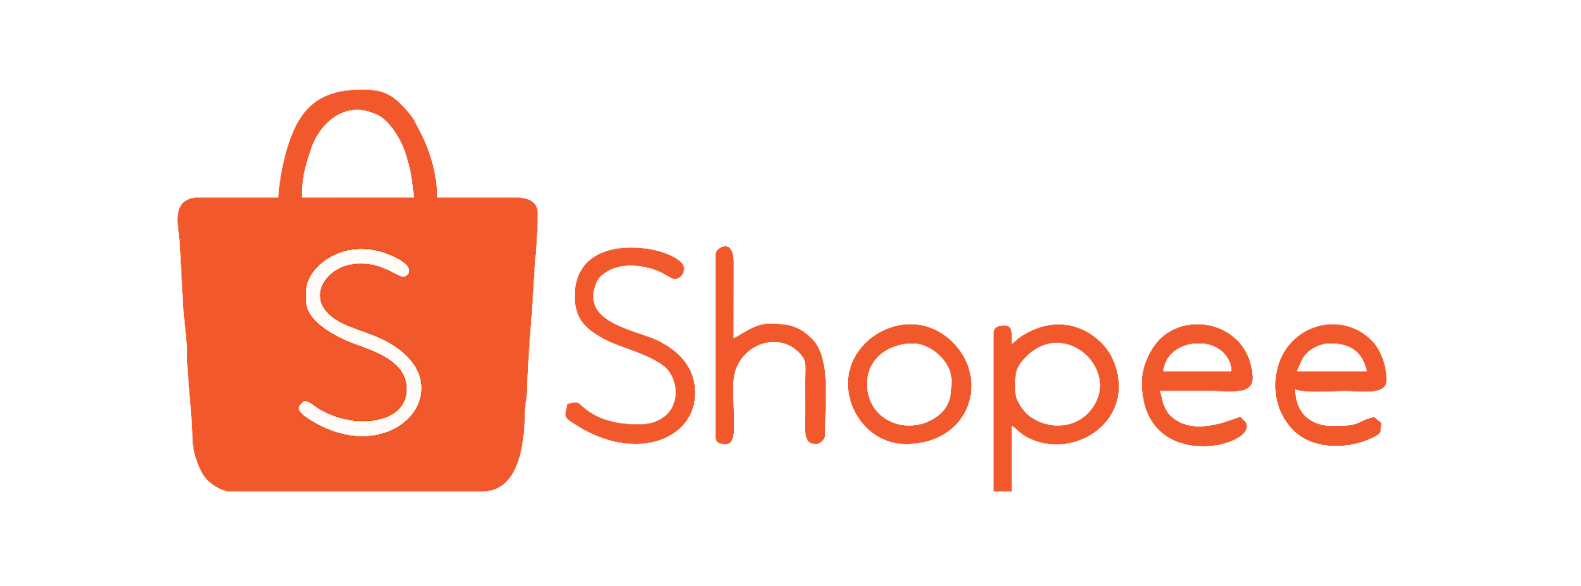 shopee-logo-vector-download-3